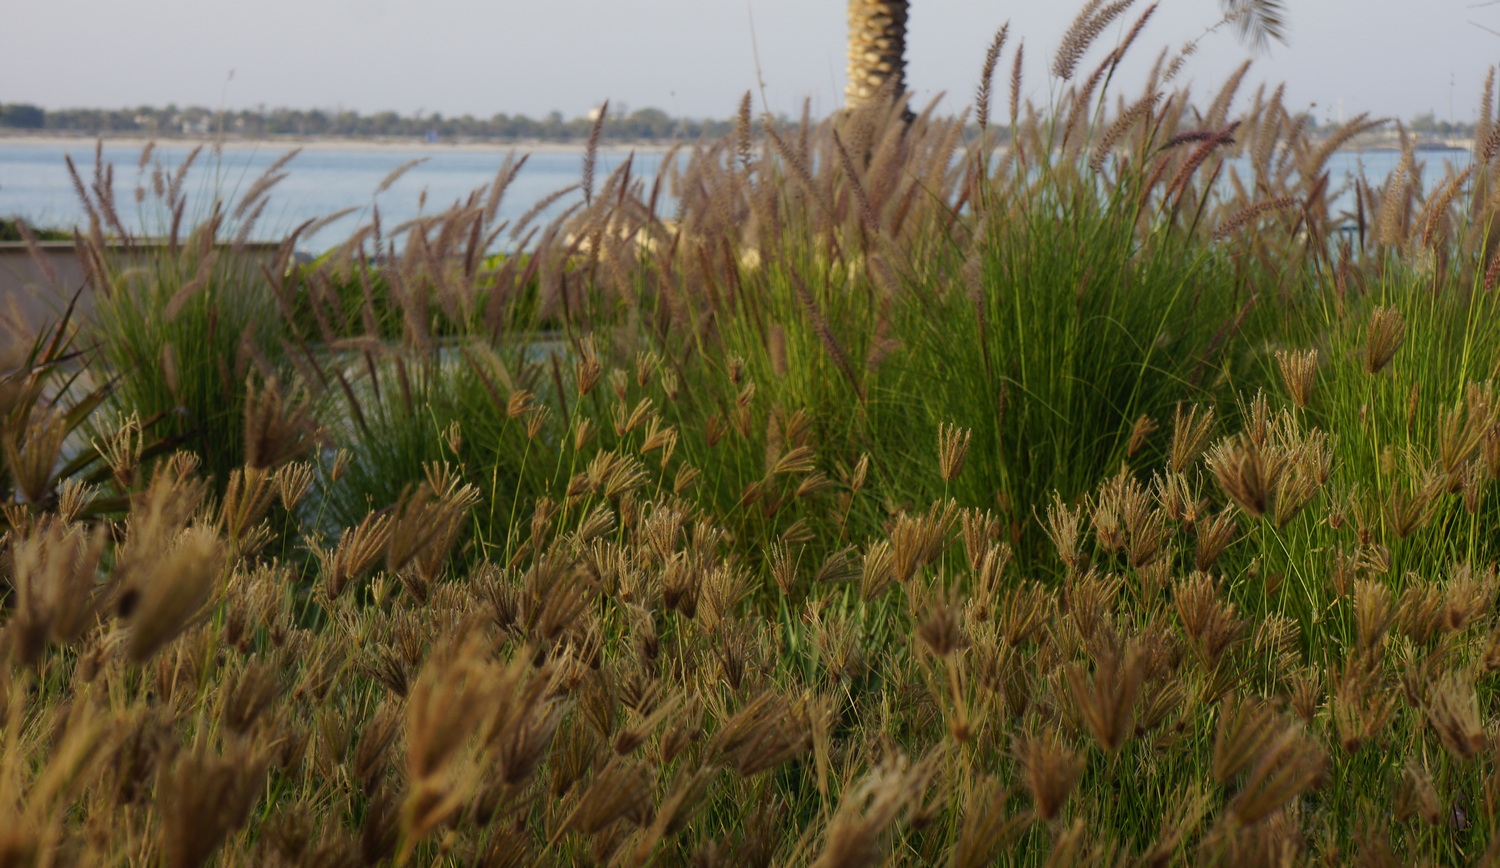 Grassess in Abu Dhabi